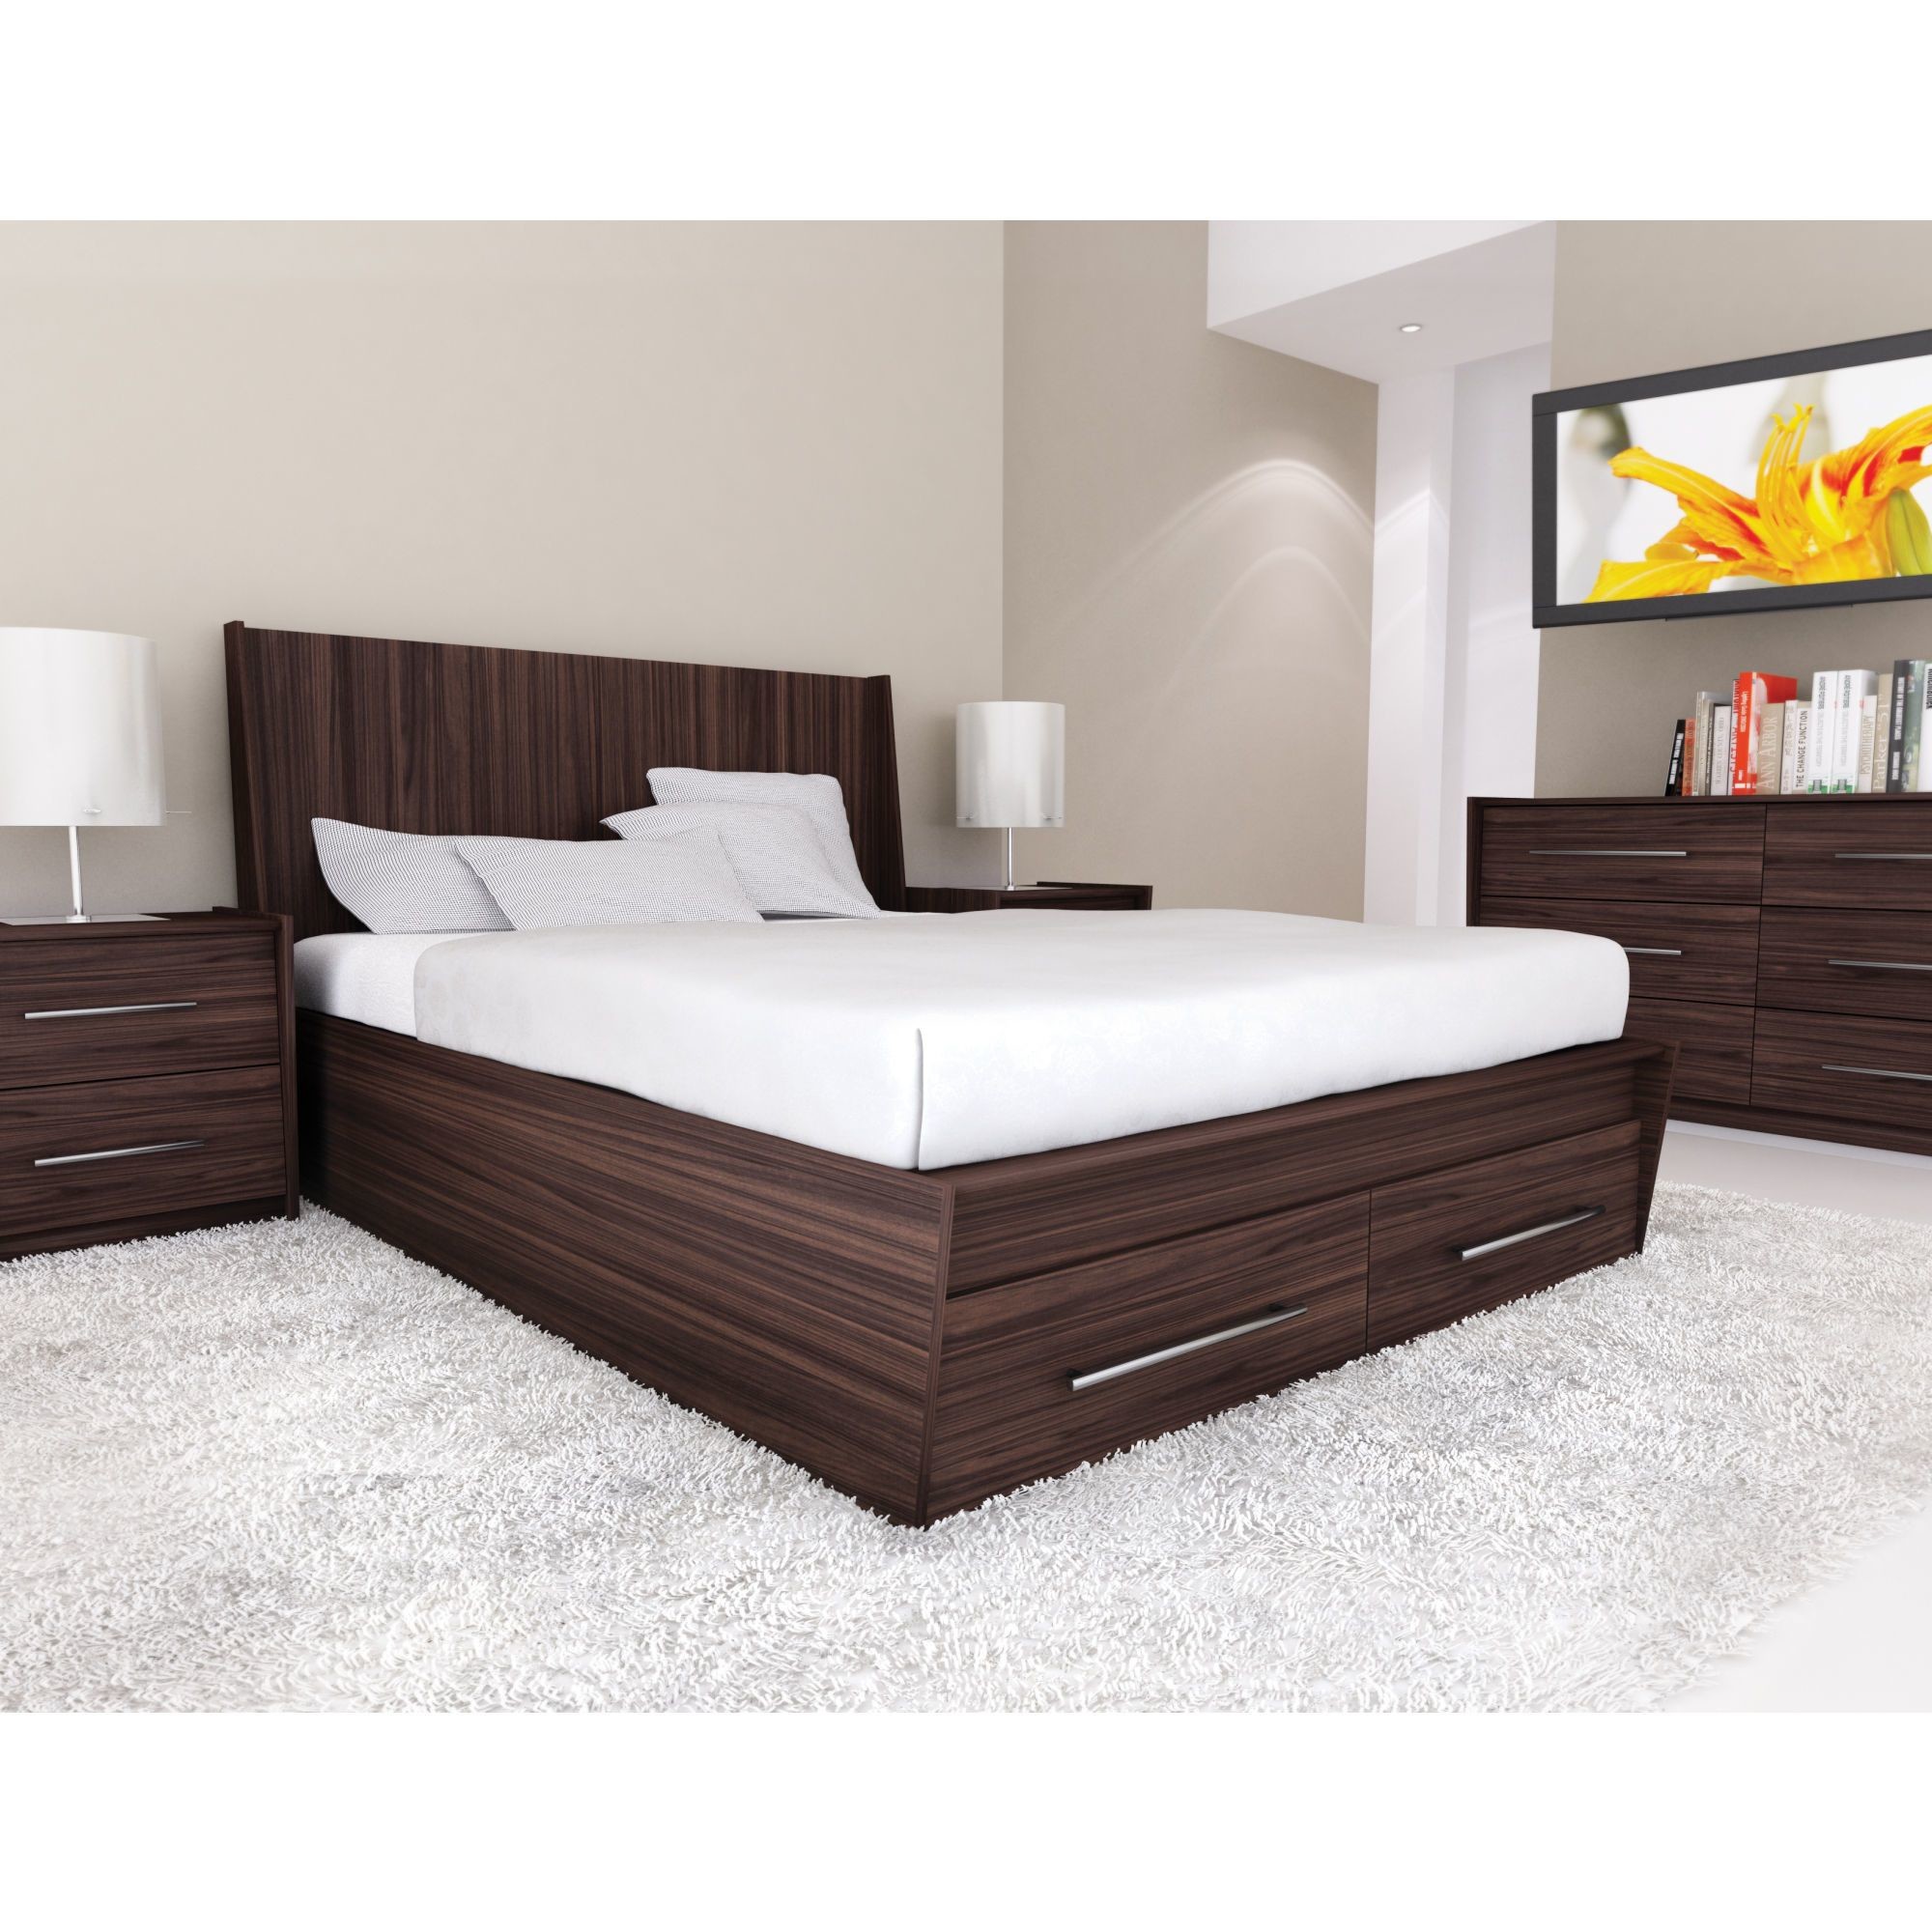 New Bedroom Interior Design Ideas 
 Data Src Free Wallpaper - Bedroom Double Bed Design - HD Wallpaper 